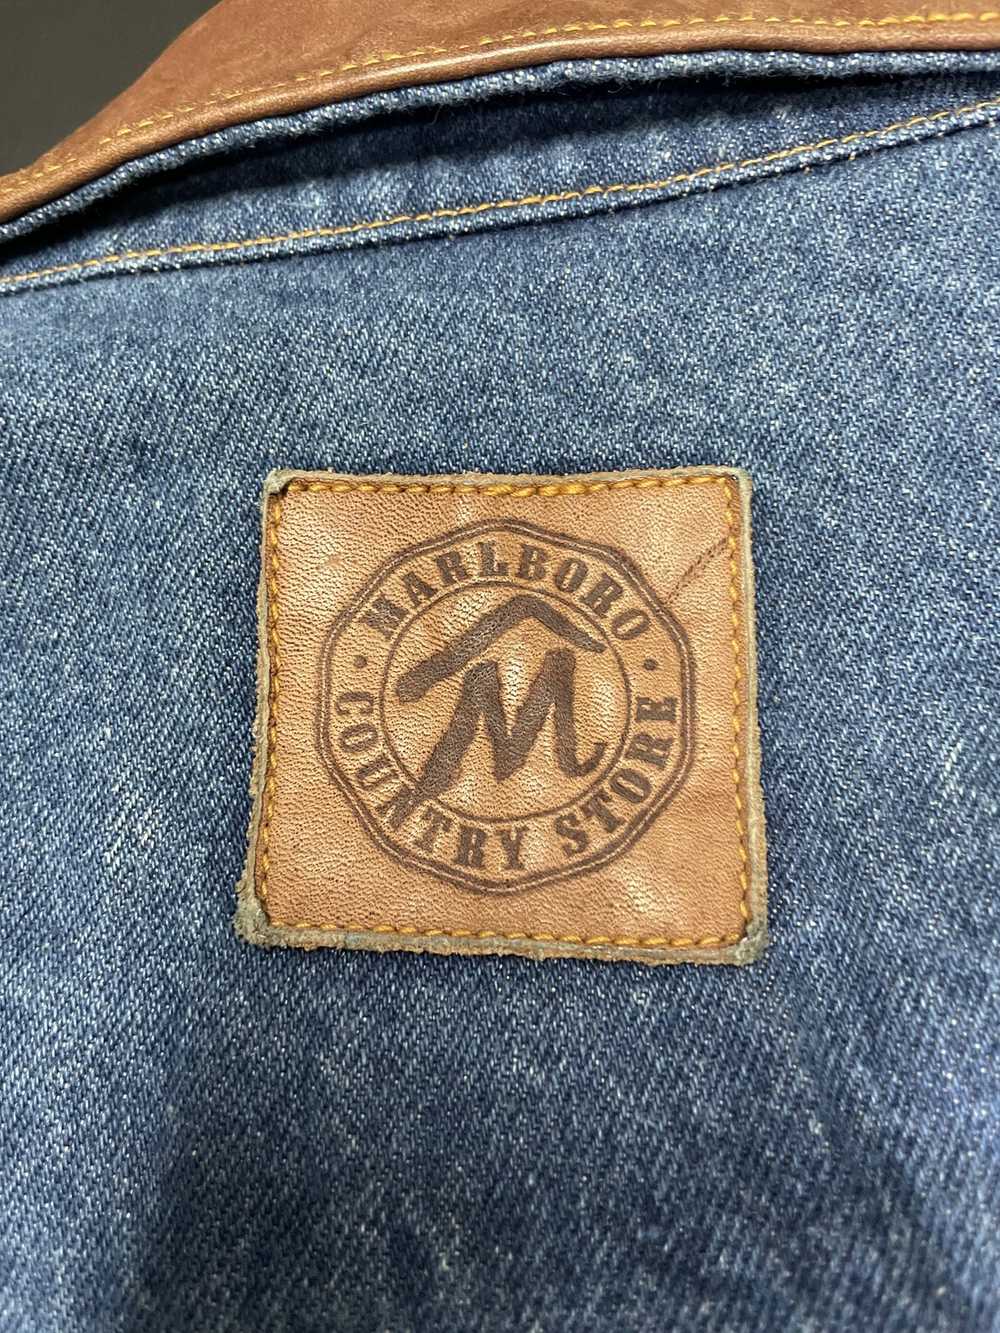 Marlboro Marlboro Country Store Denim Jacket - image 7